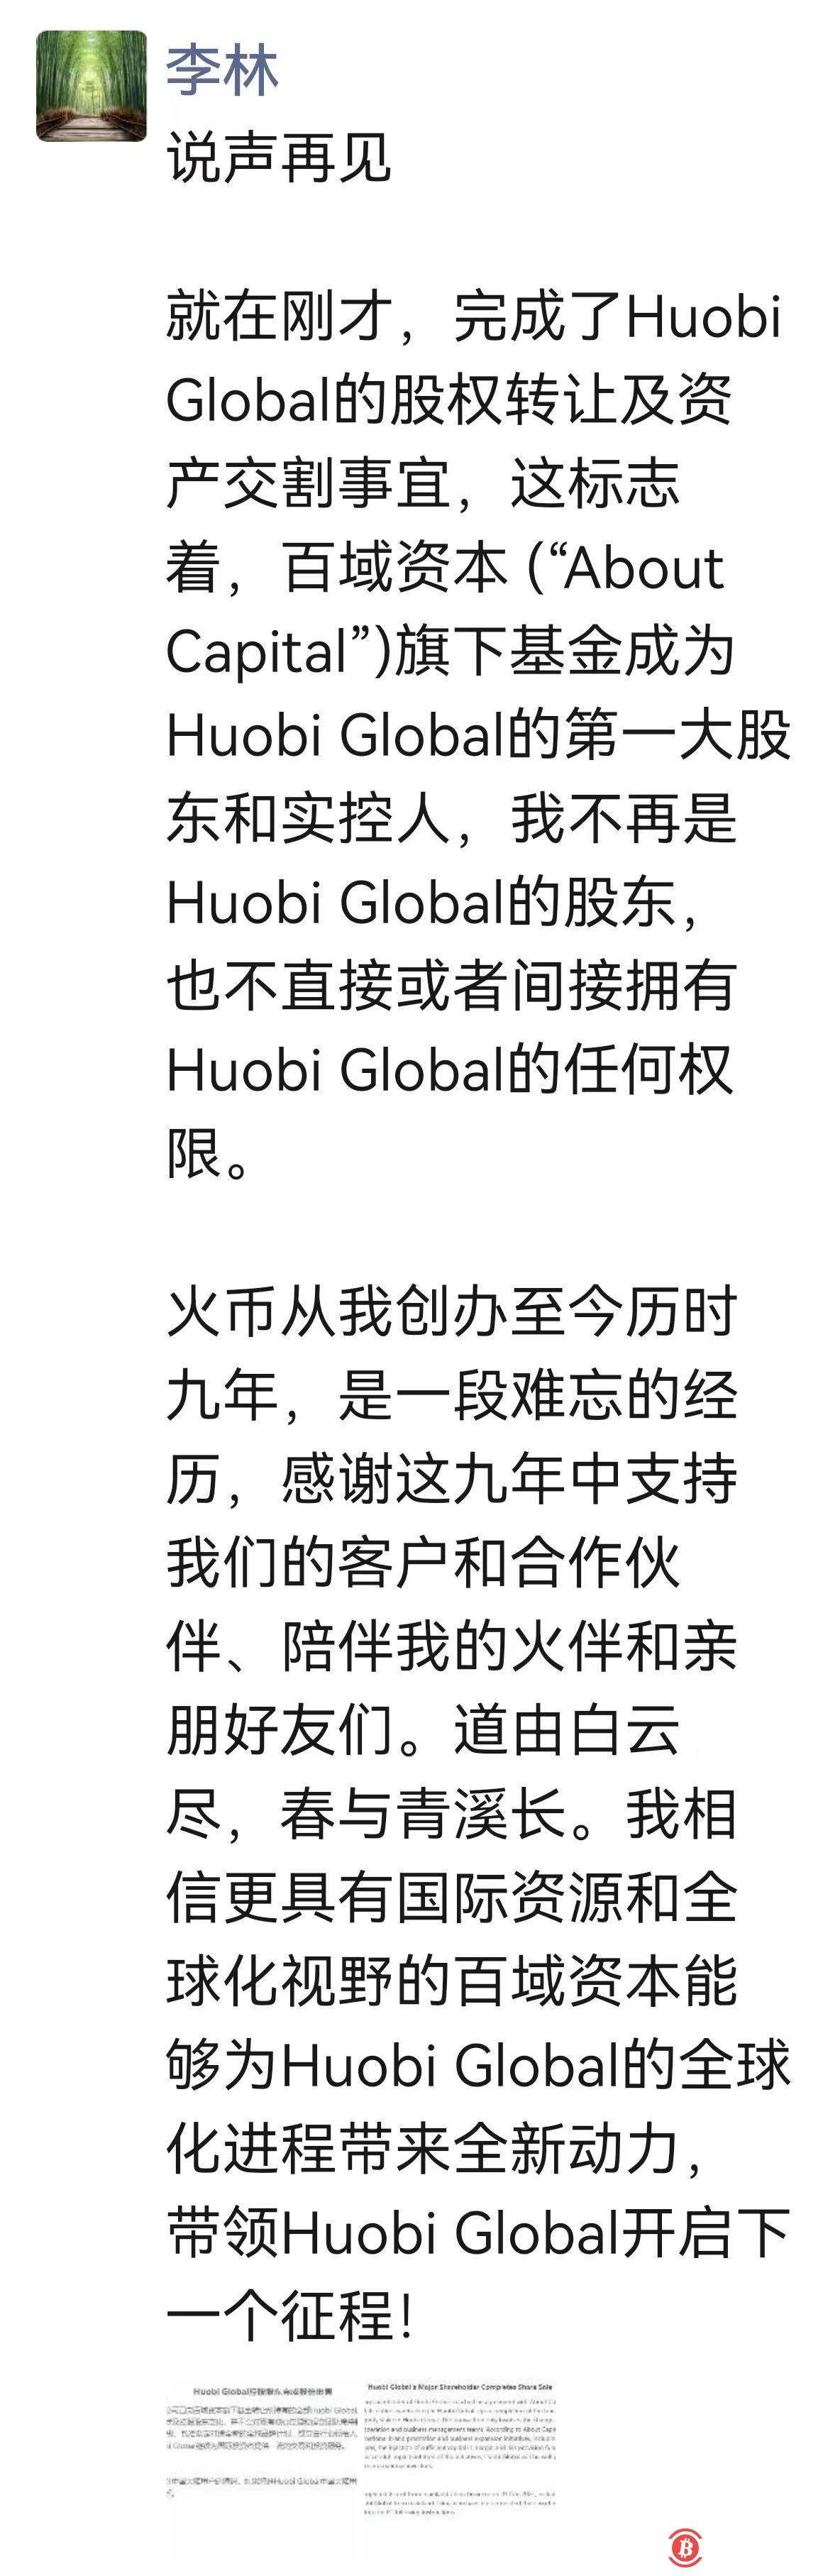 Huobi创始人李林：不再是实控人与股东，不拥有任何权限